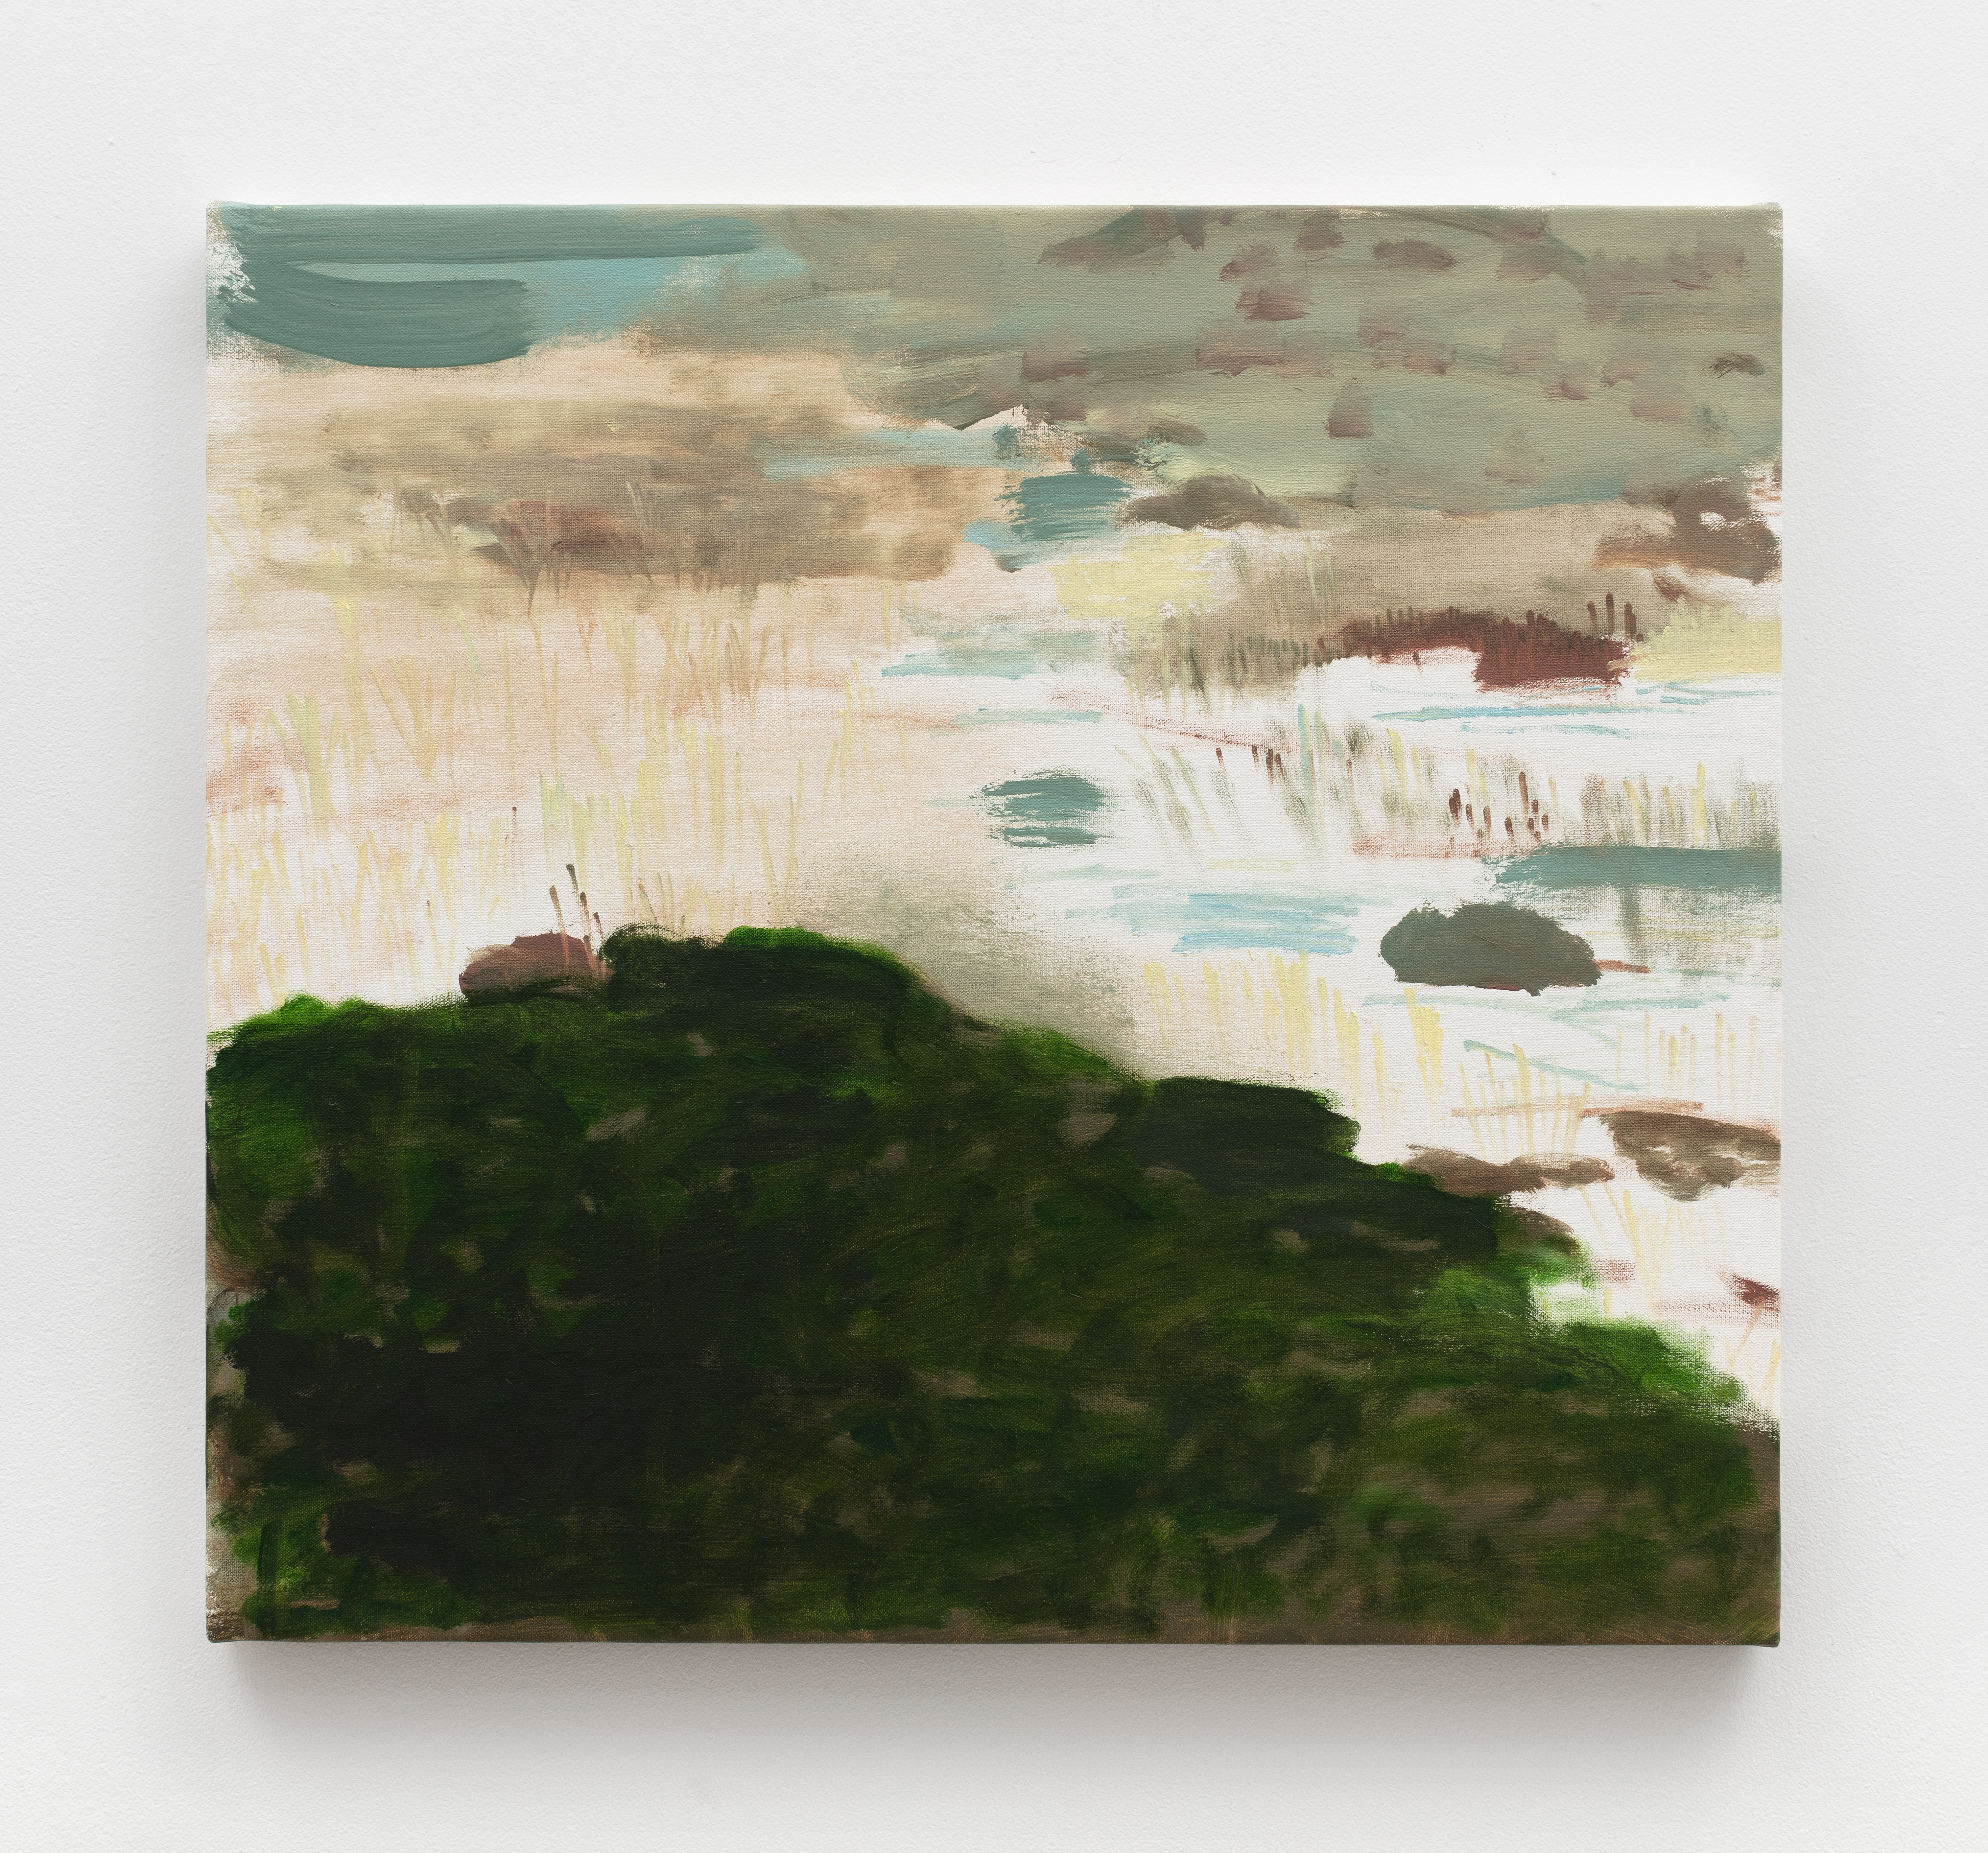 Trevor Shimizu
Dunes (2), 2019
Oil on canvas
20 x 26 inches
50.8 x 66 cm